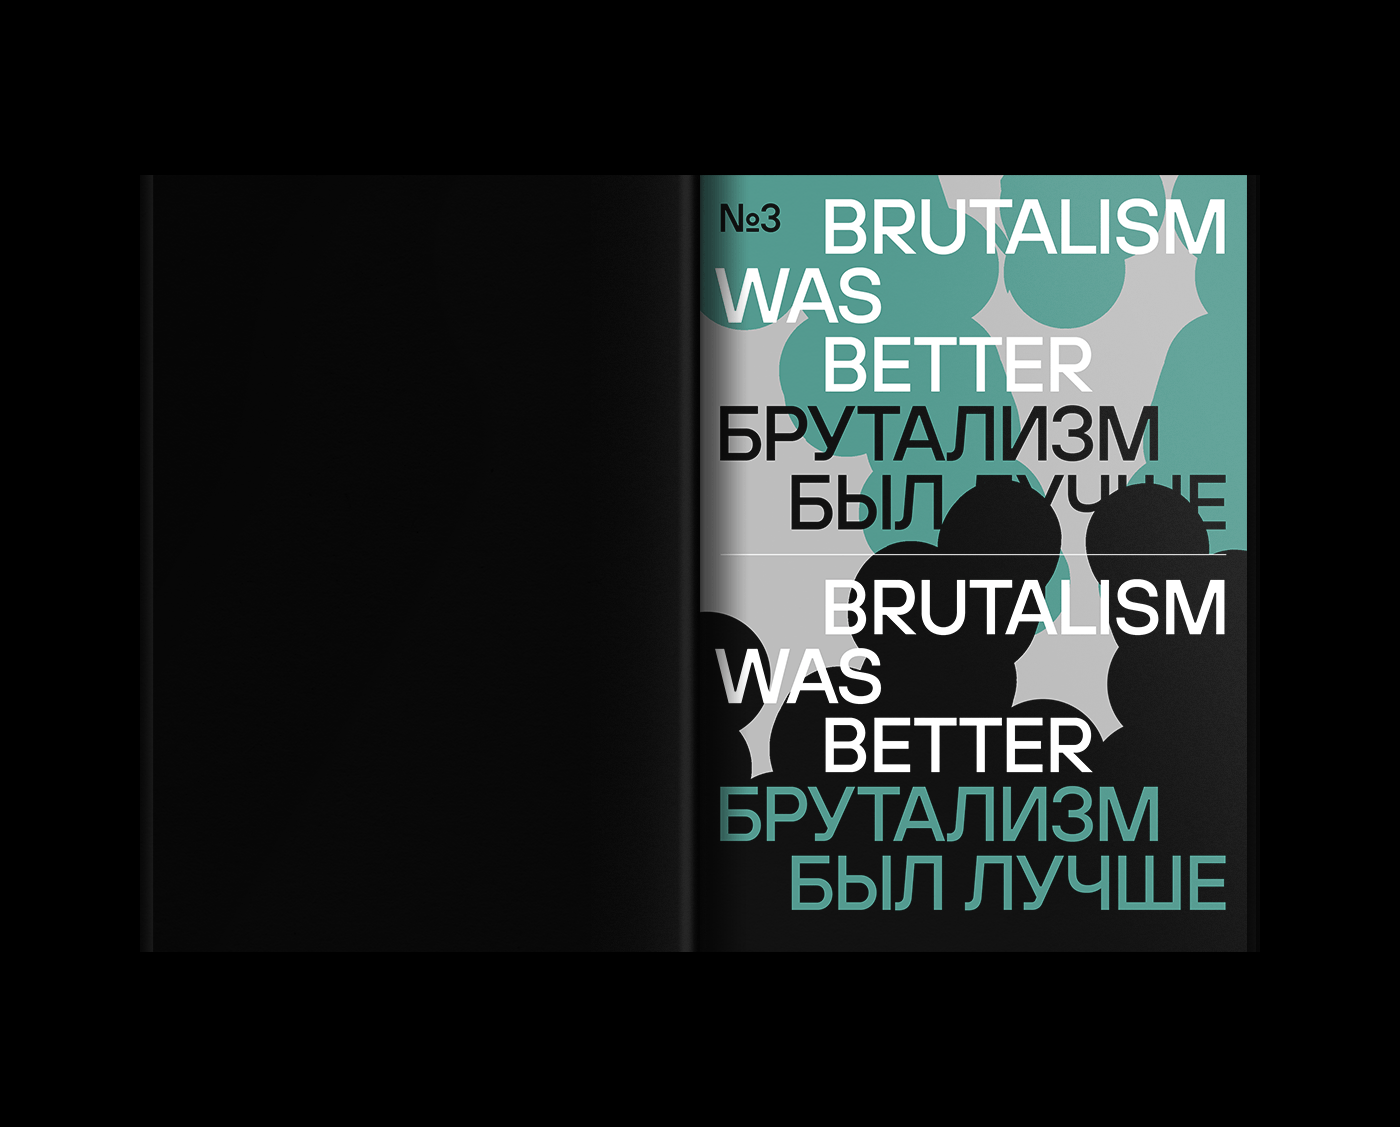 Brutalism editorial journal magazine брутализм верстка журнал каталог сербия Србија